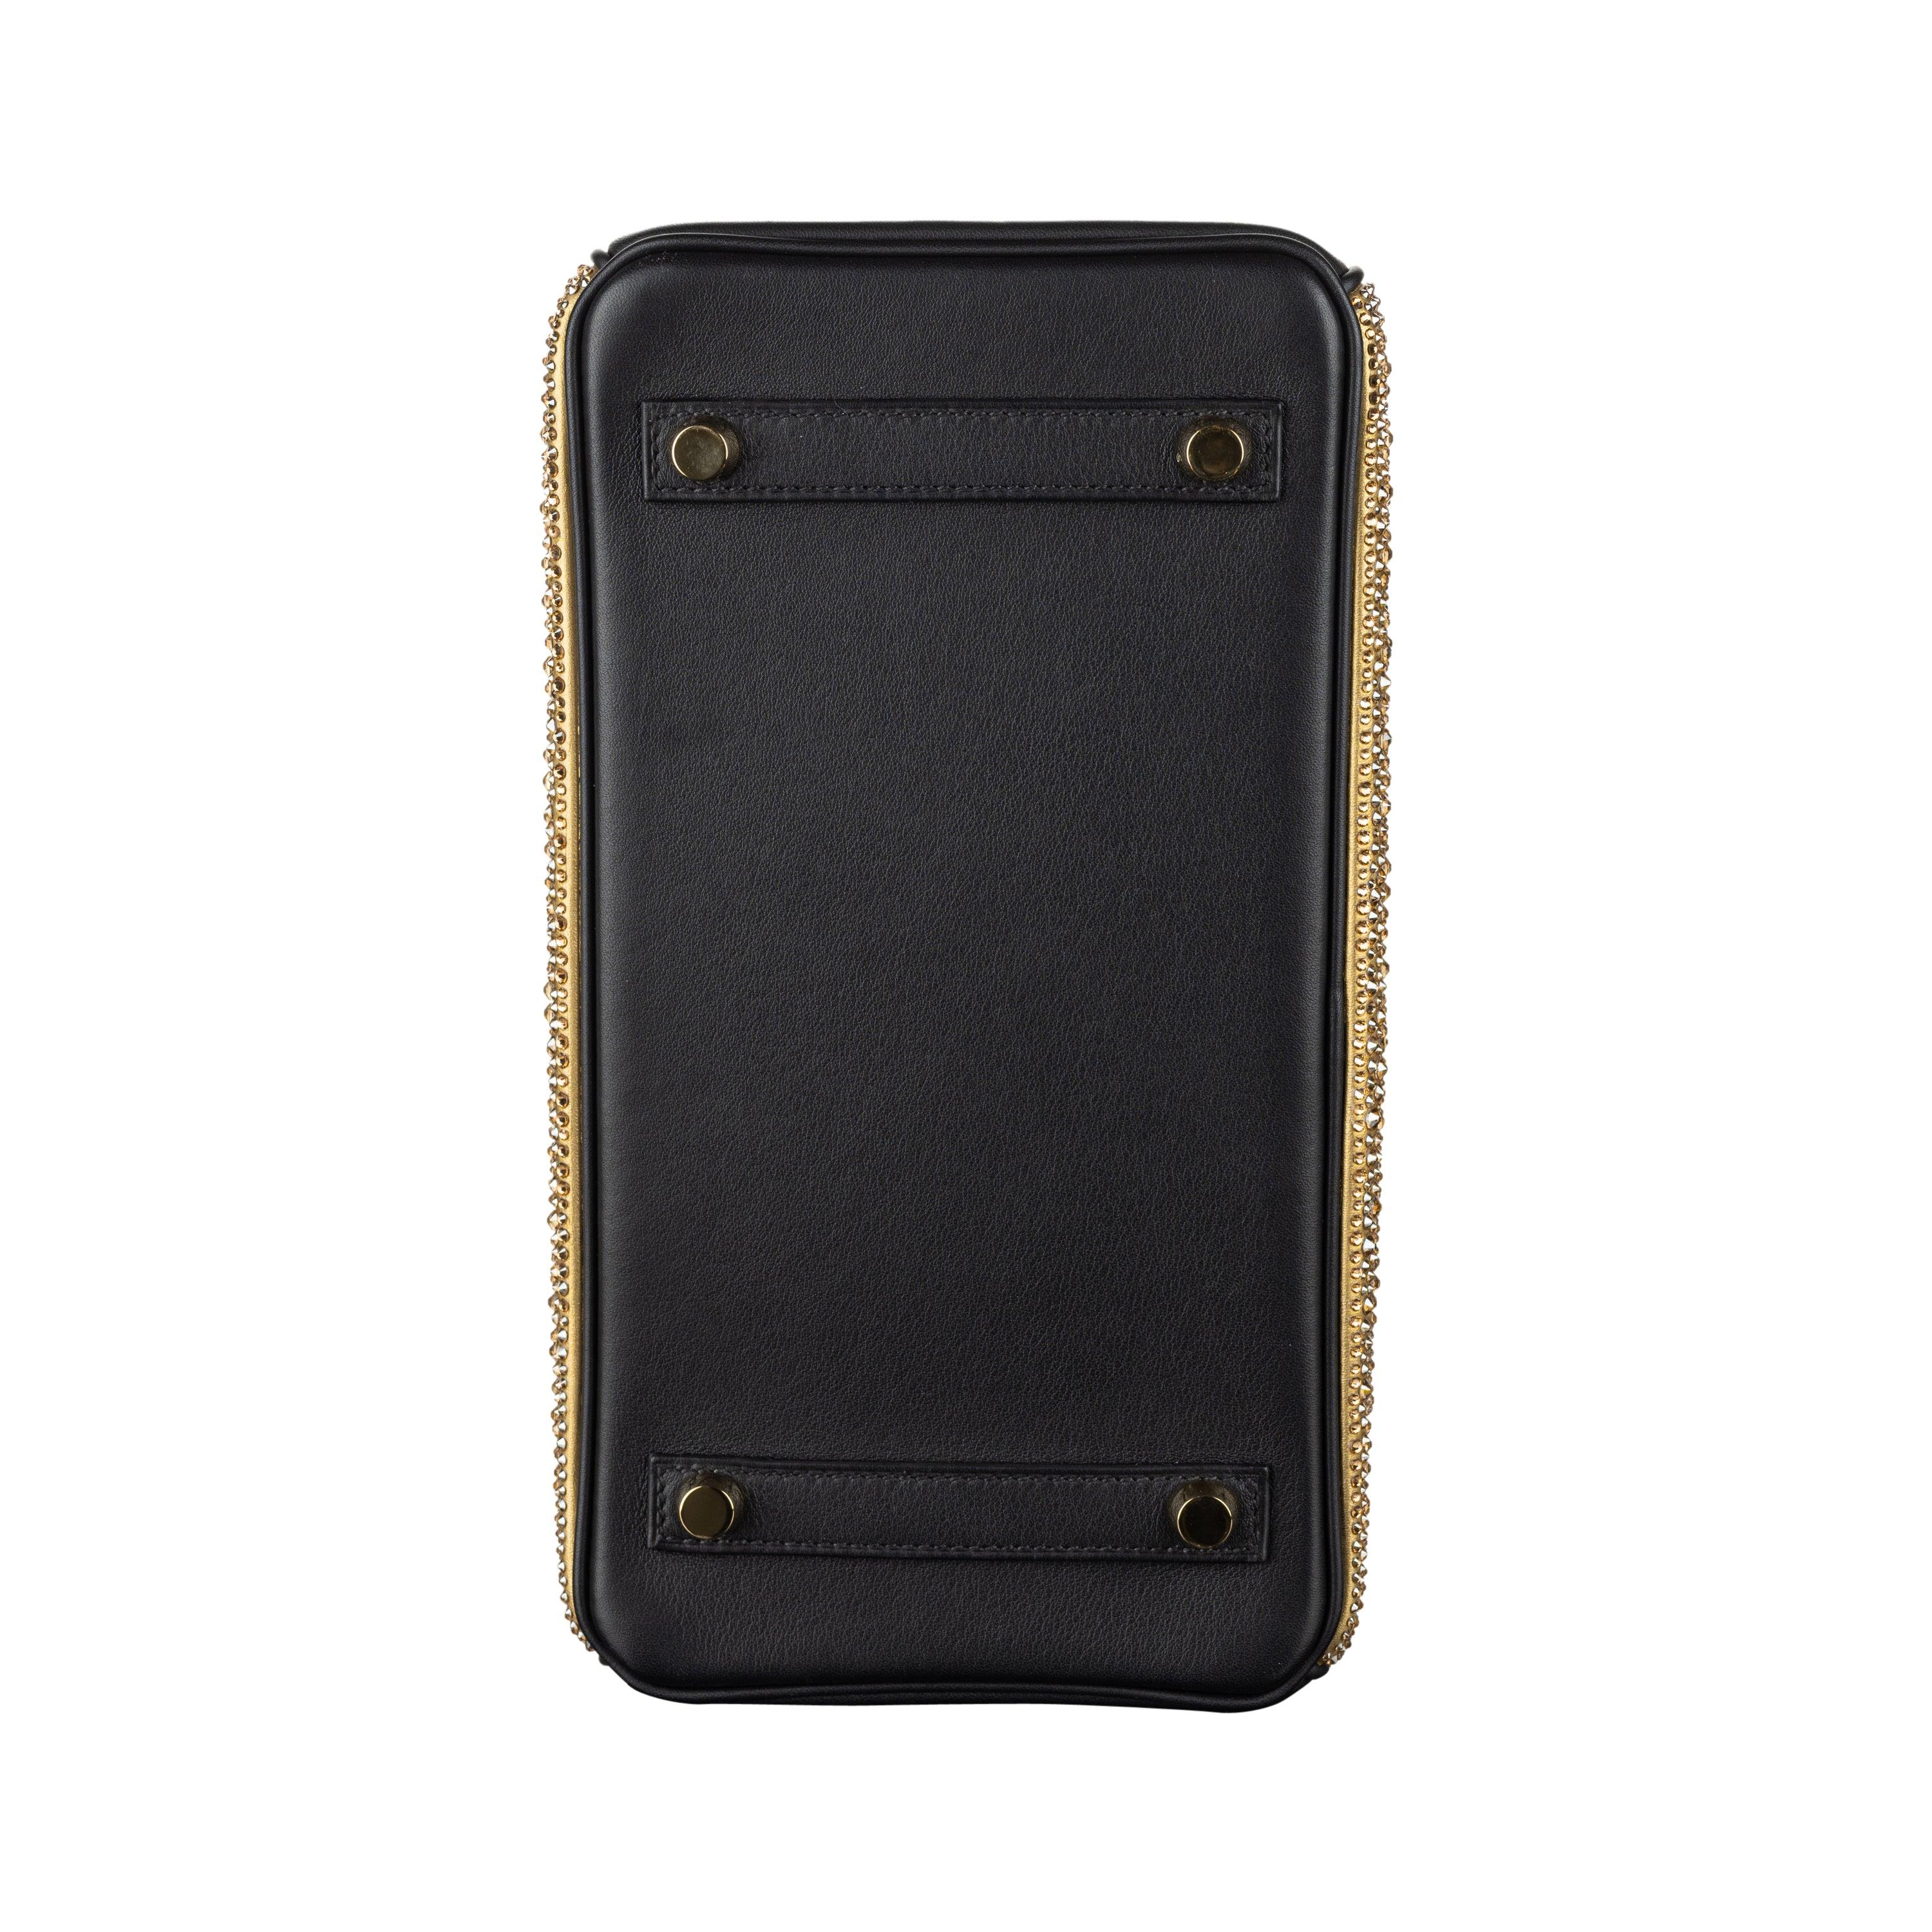 Hermès 25cm Birkin Customized Gold Moneybags Swarovski Crystal Gold Hardware For Sale 5